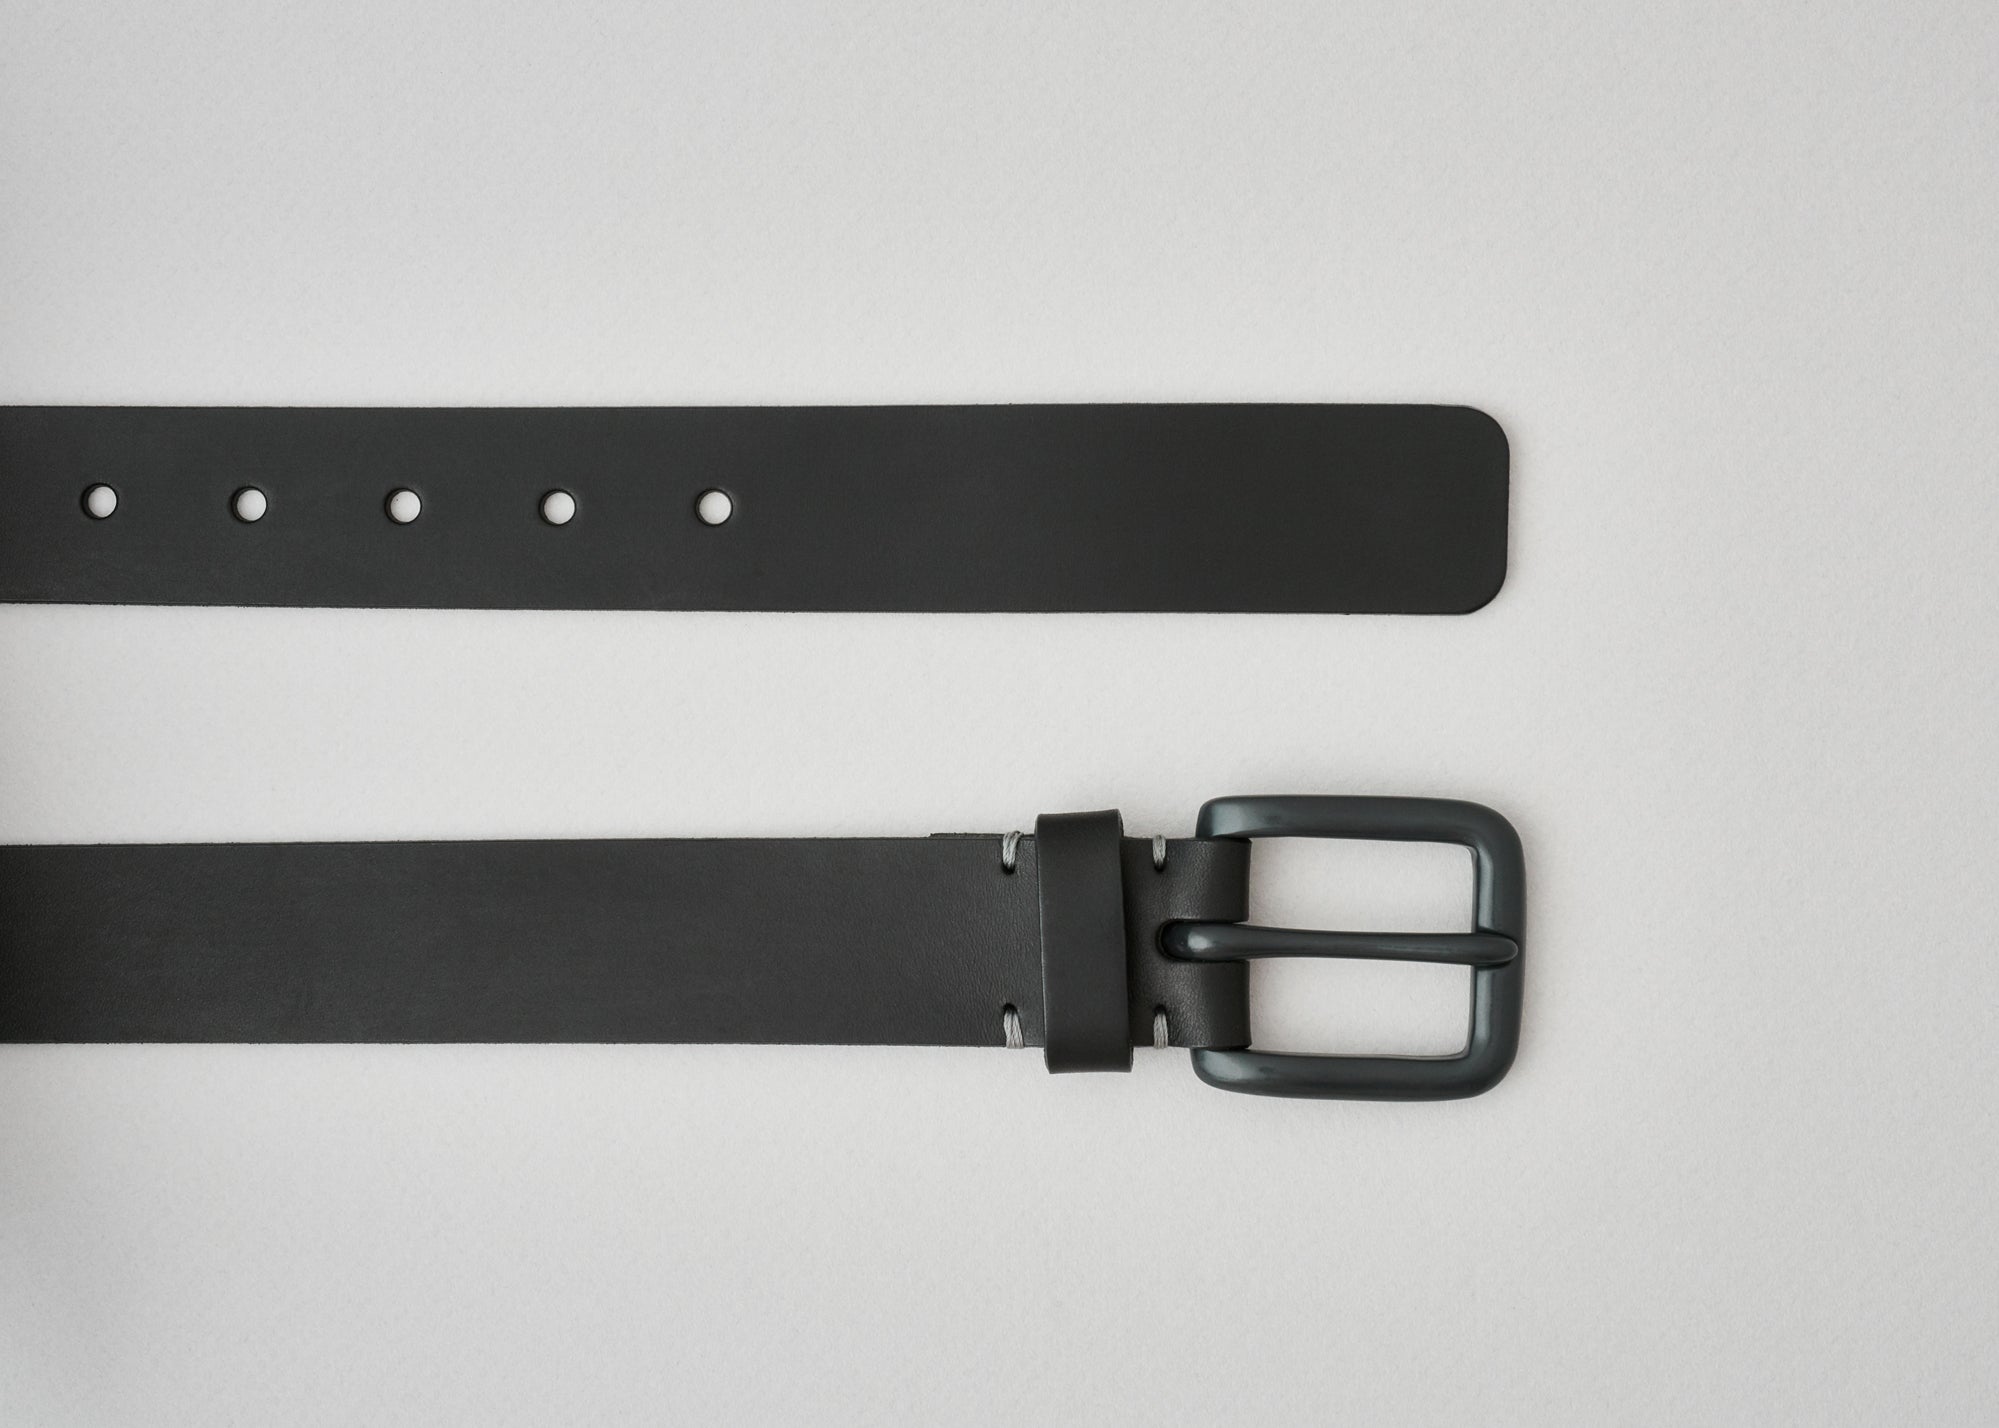 Modernist Belt - Pitch Black / Grey